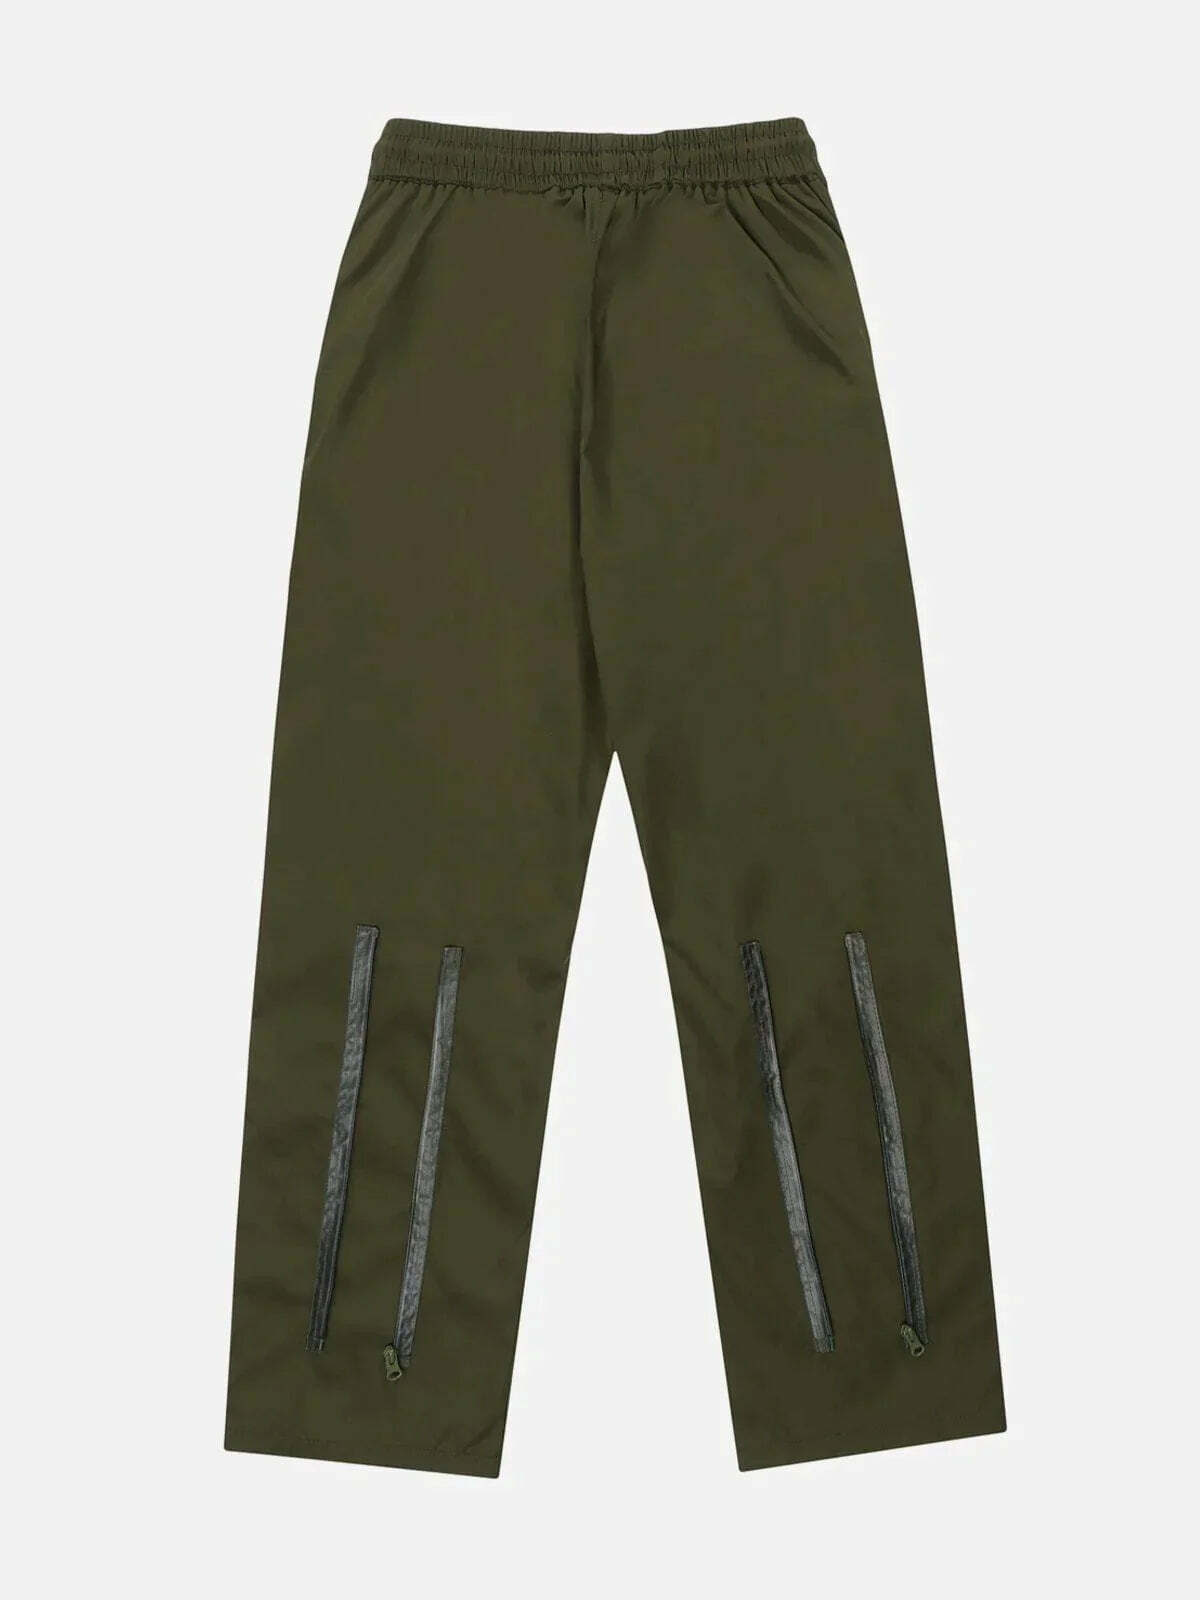 patchwork zipup pants edgy streetwear staple 8617